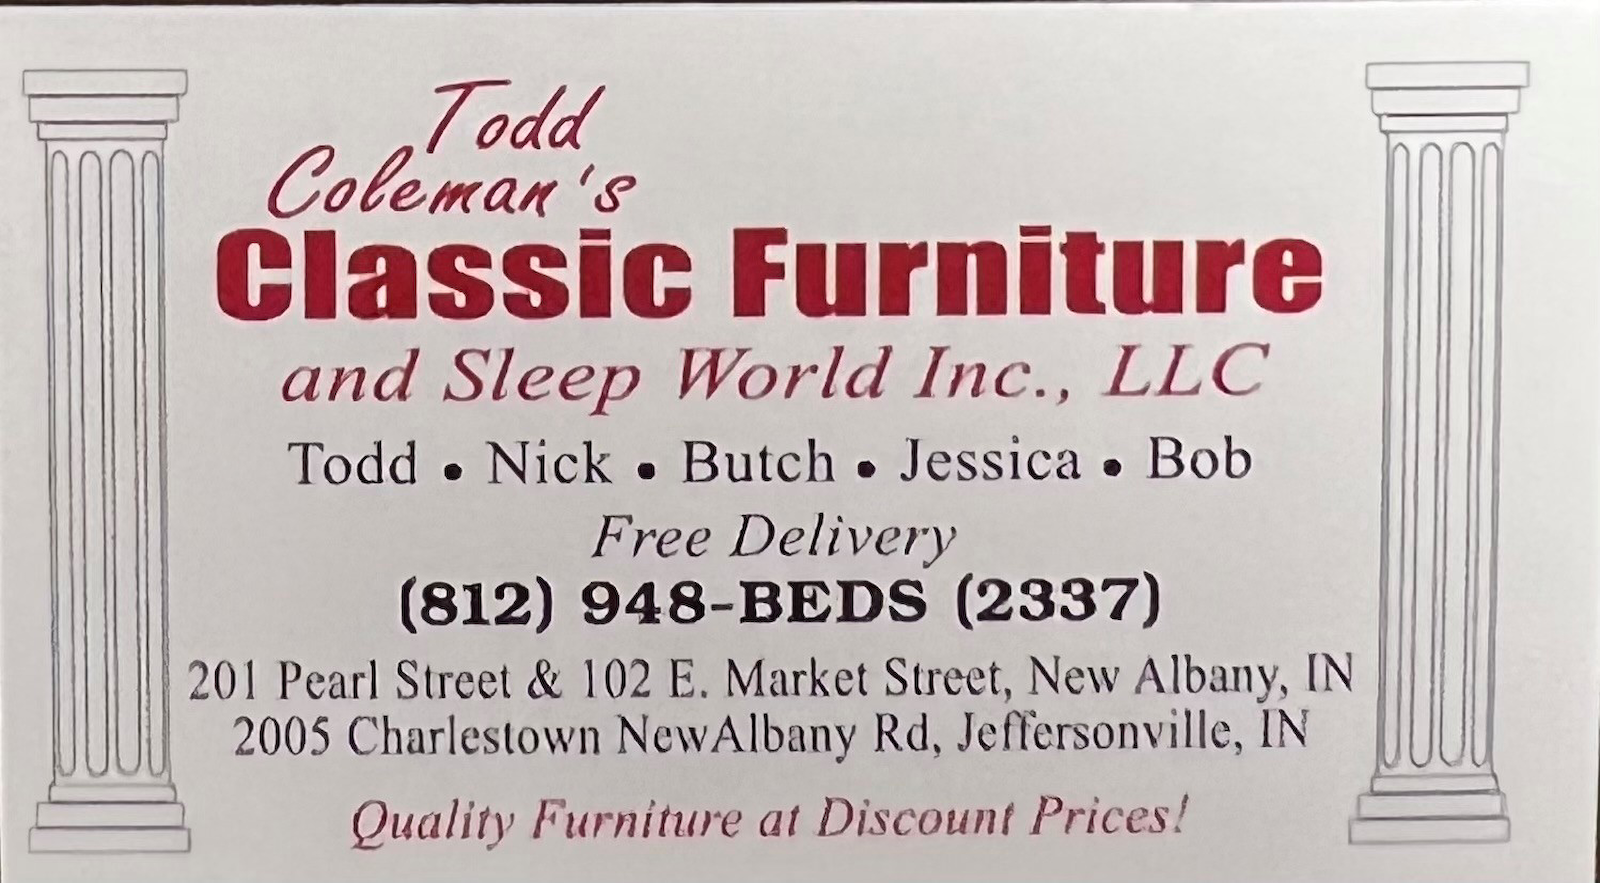 Todd Coleman's Classic Furniture